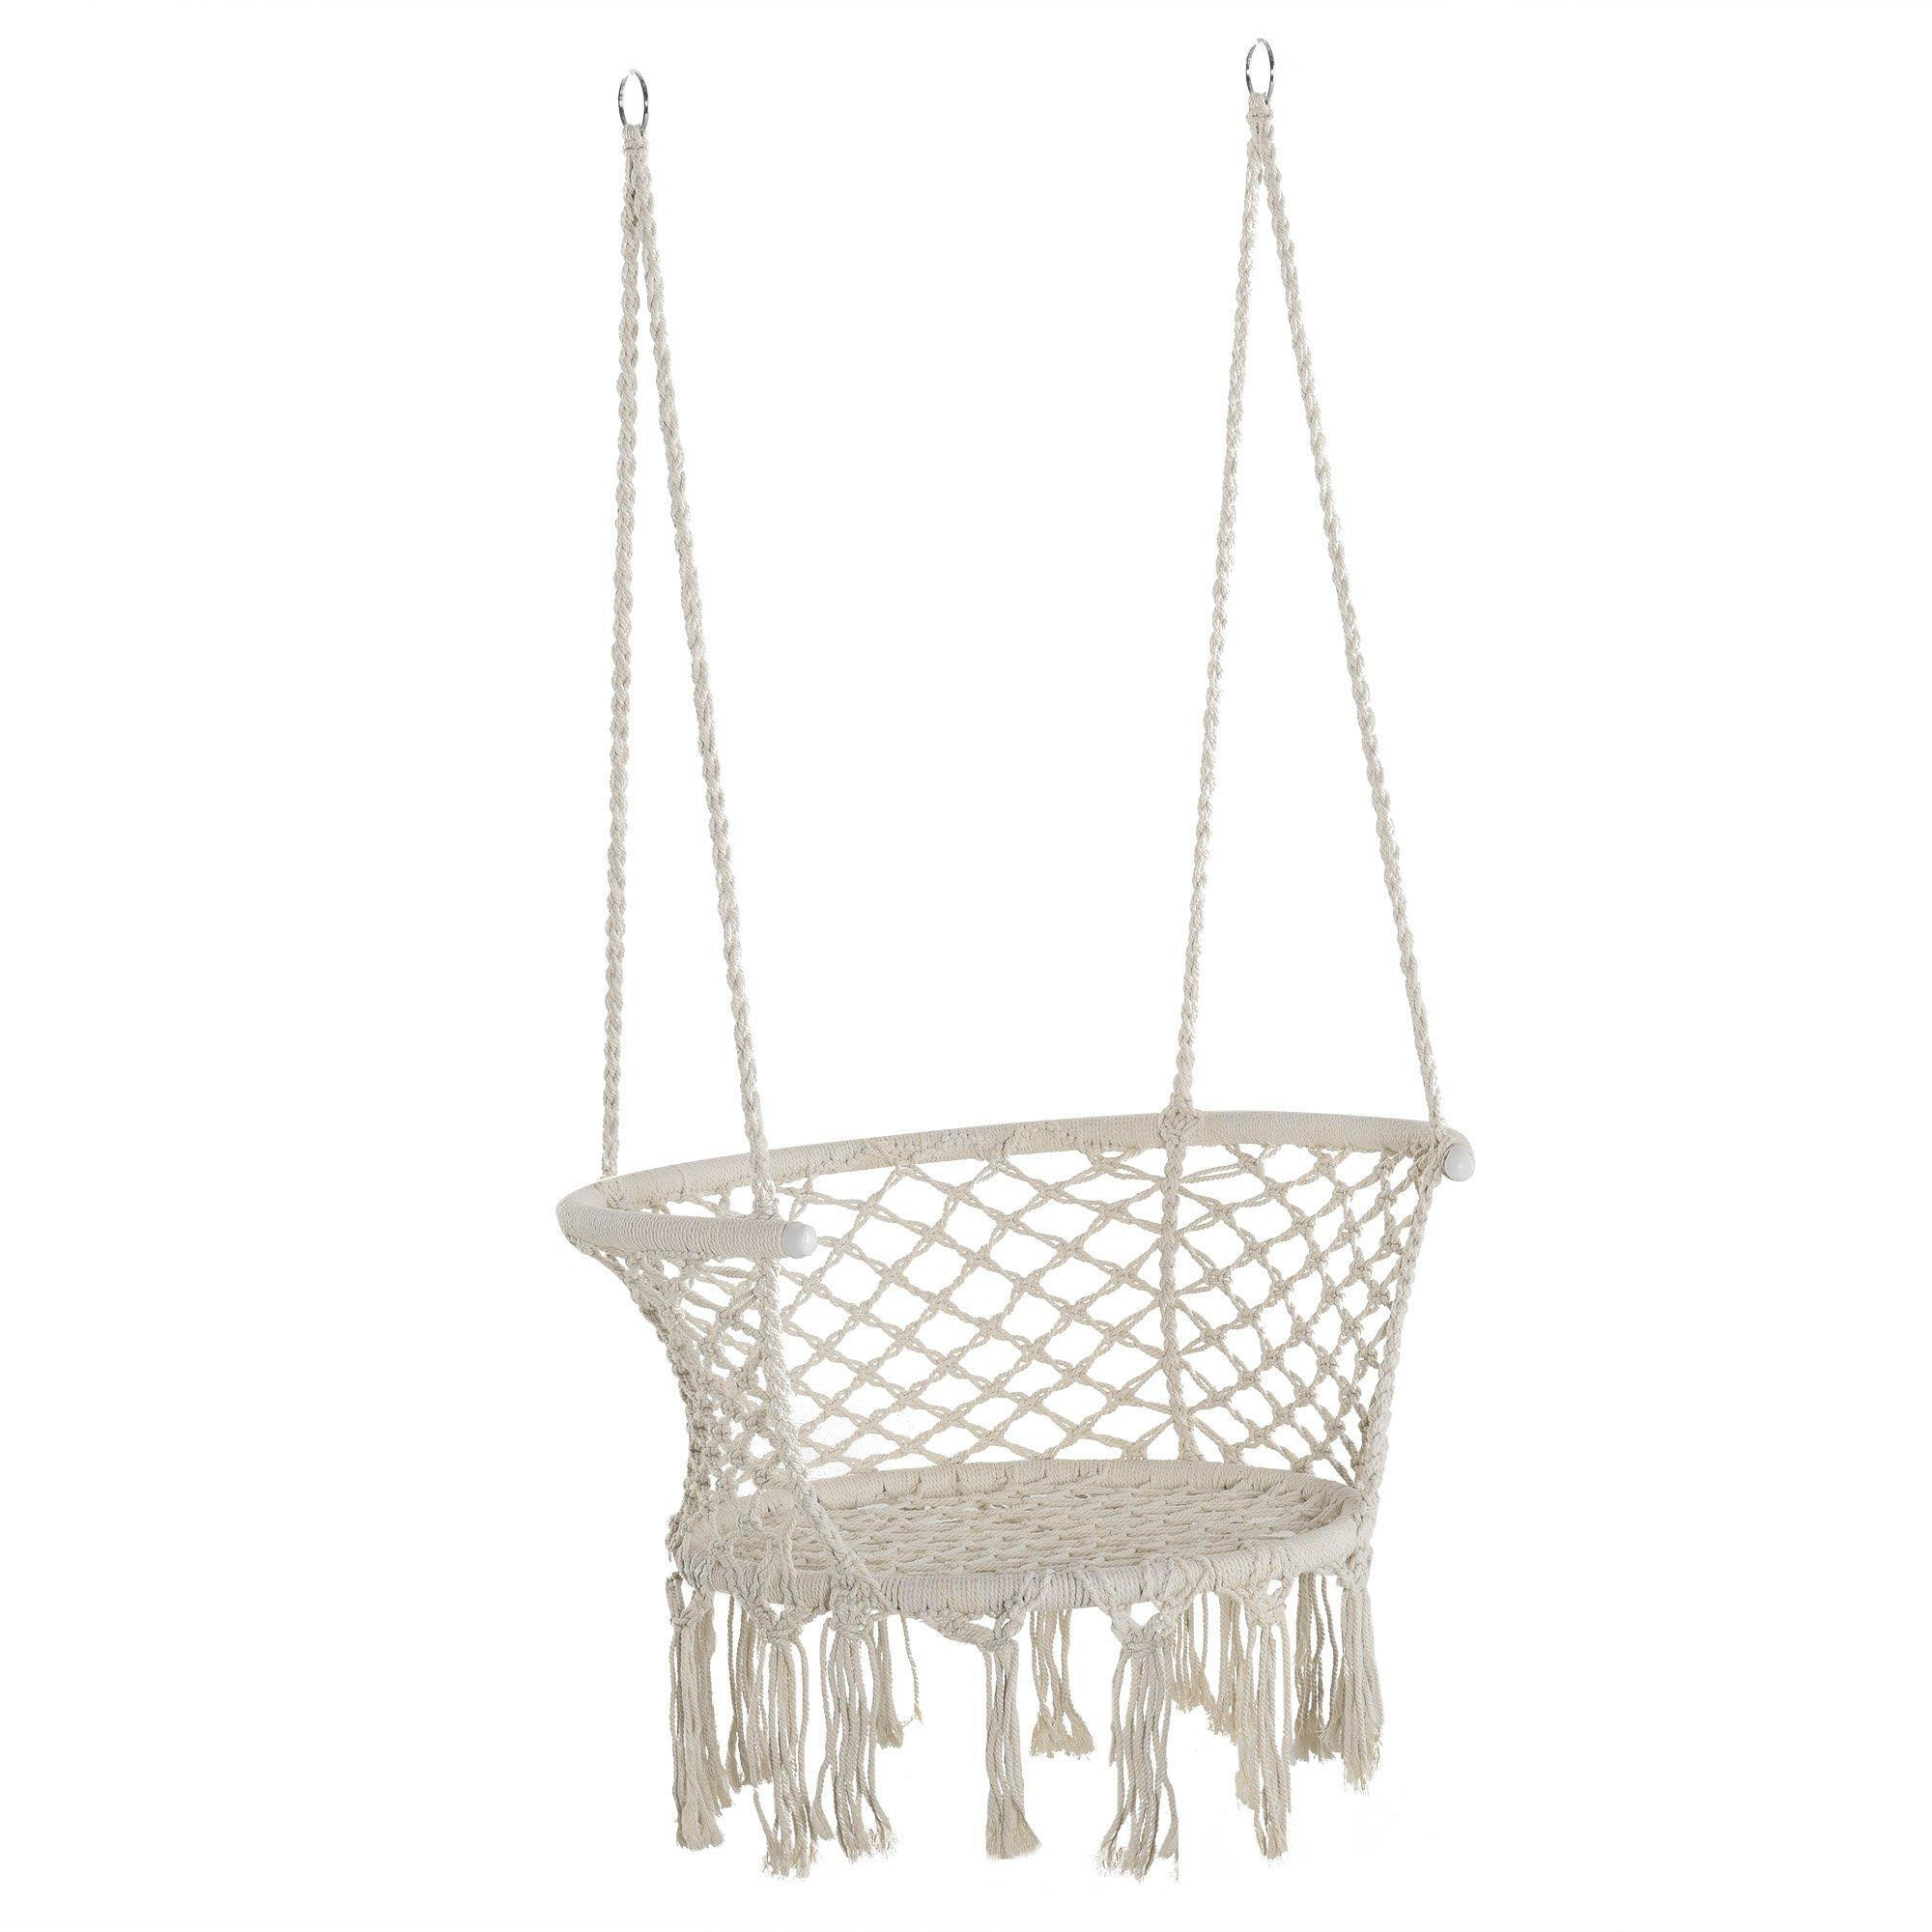 Hanging Hammock Chair Macrame Seat for Outdoor Patio Garden - image 1